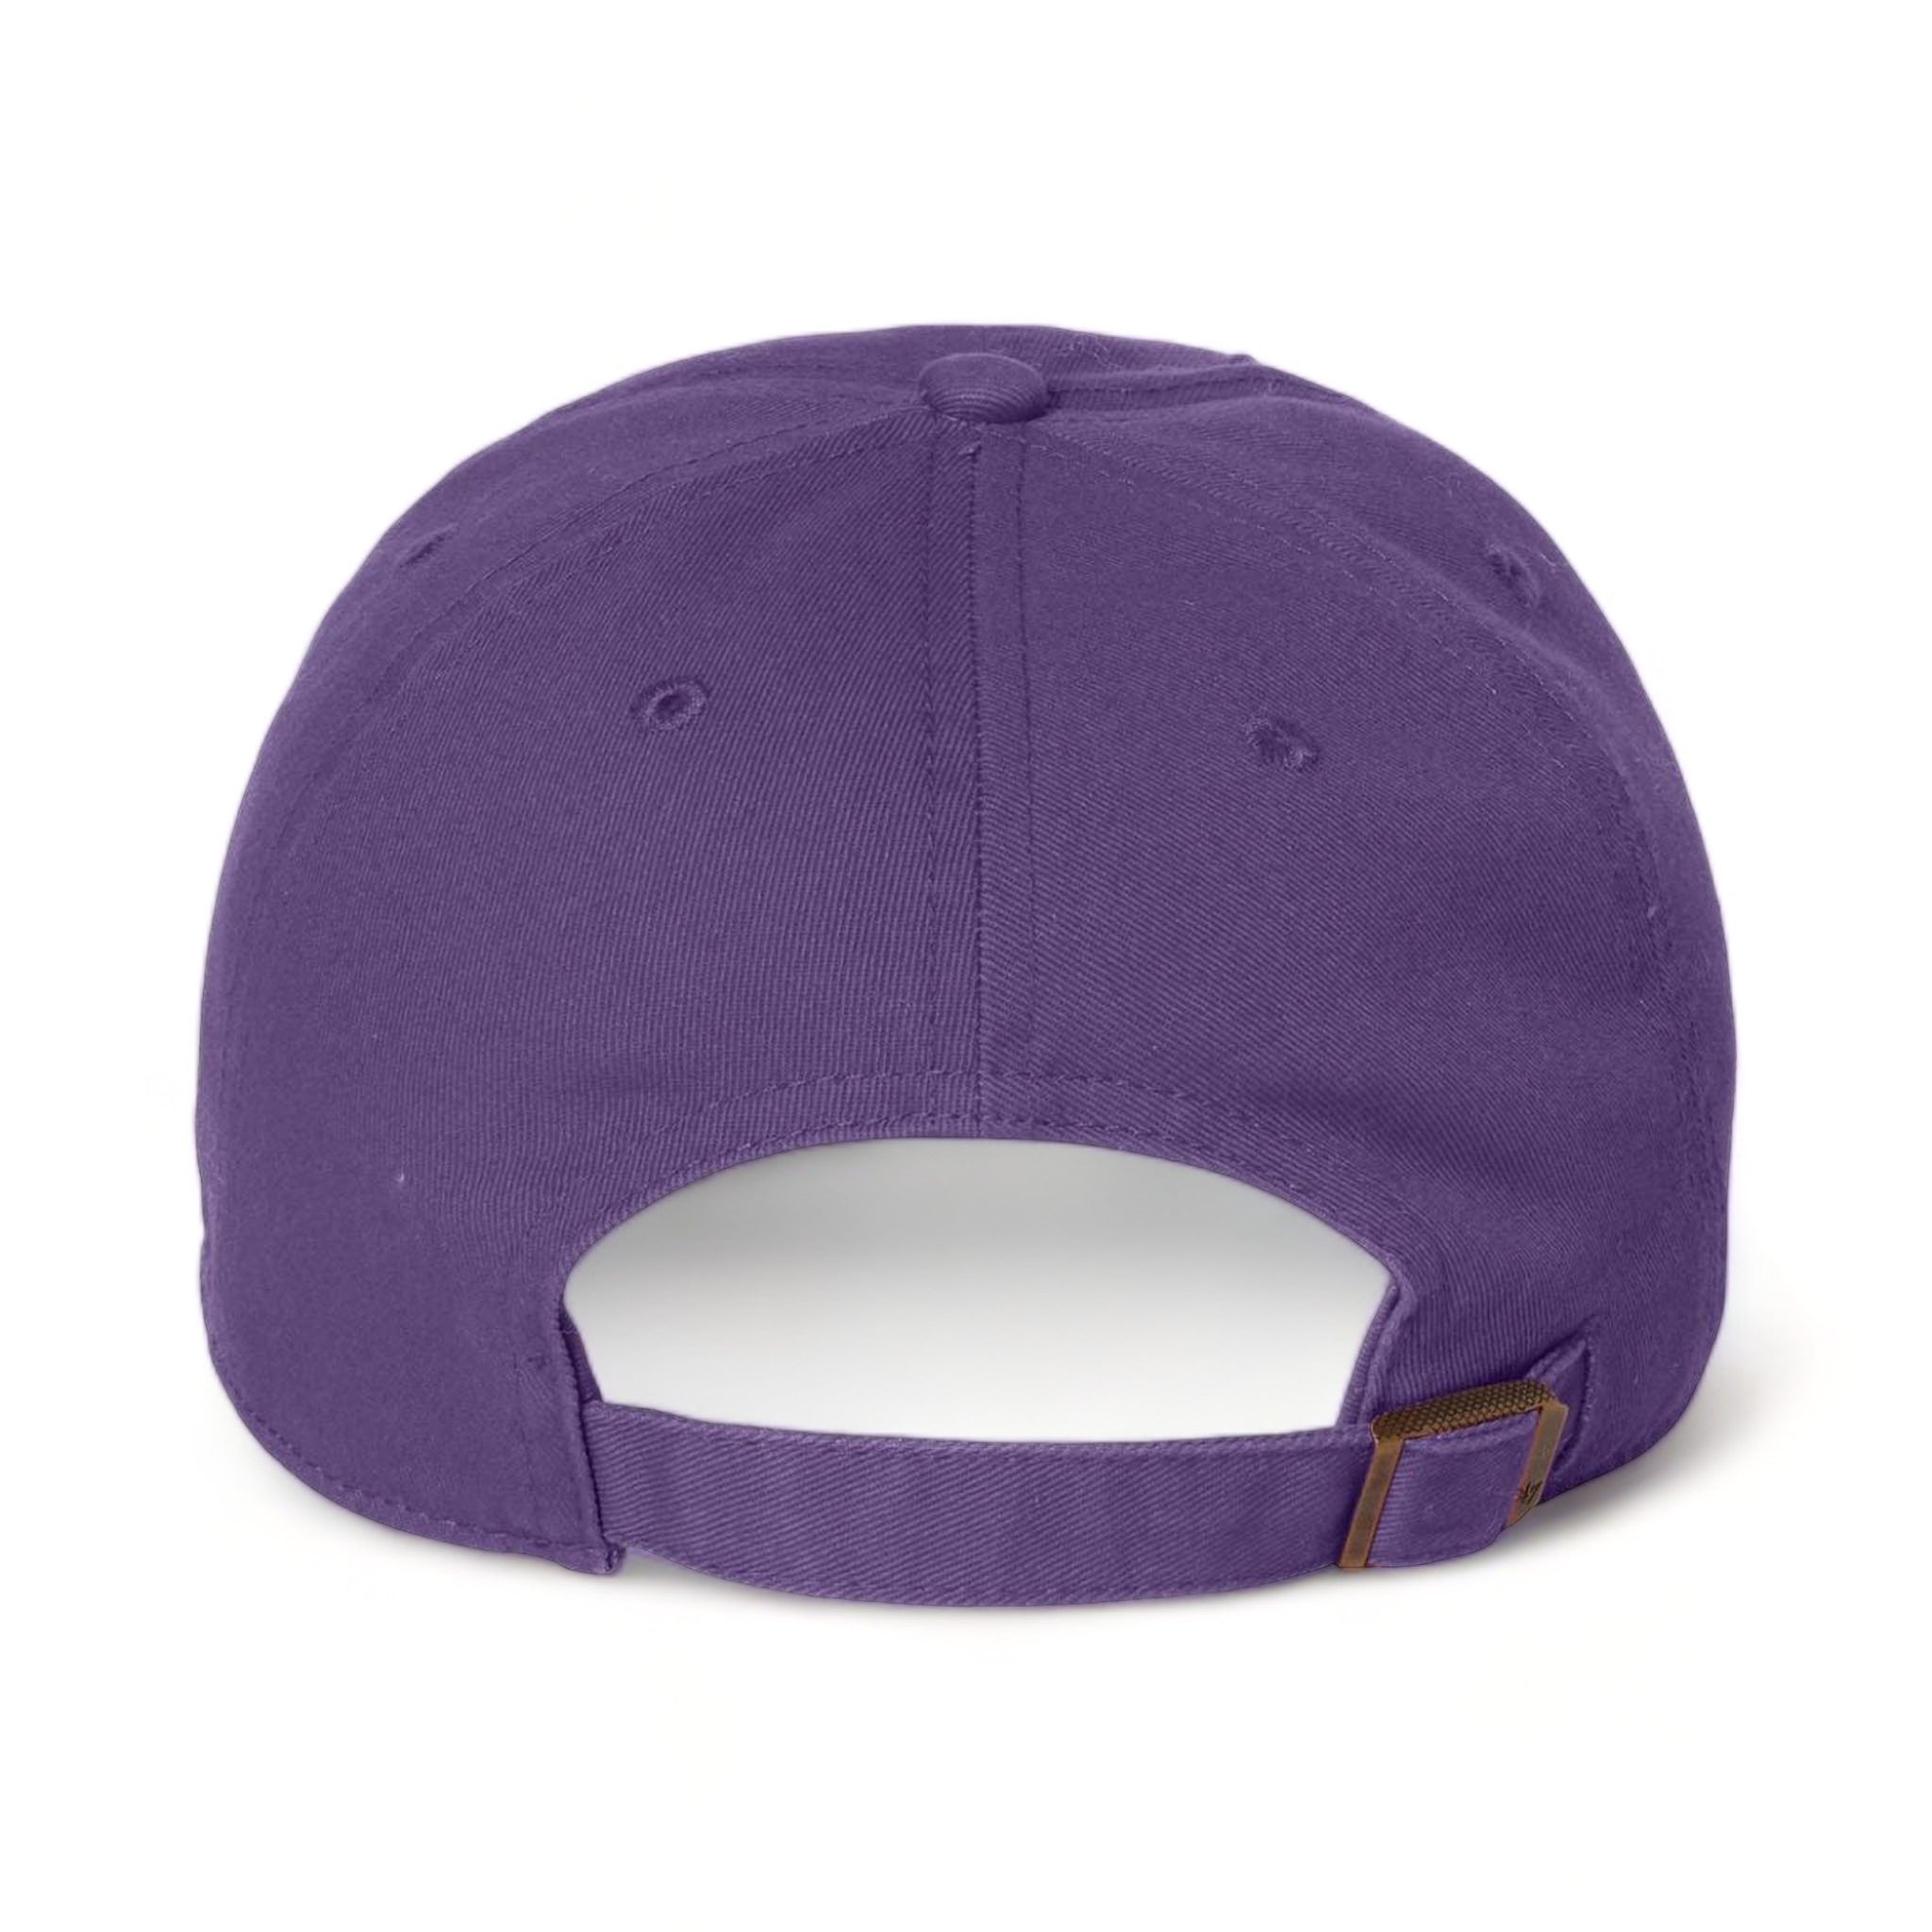 Back view of 47 Brand 4700 custom hat in purple